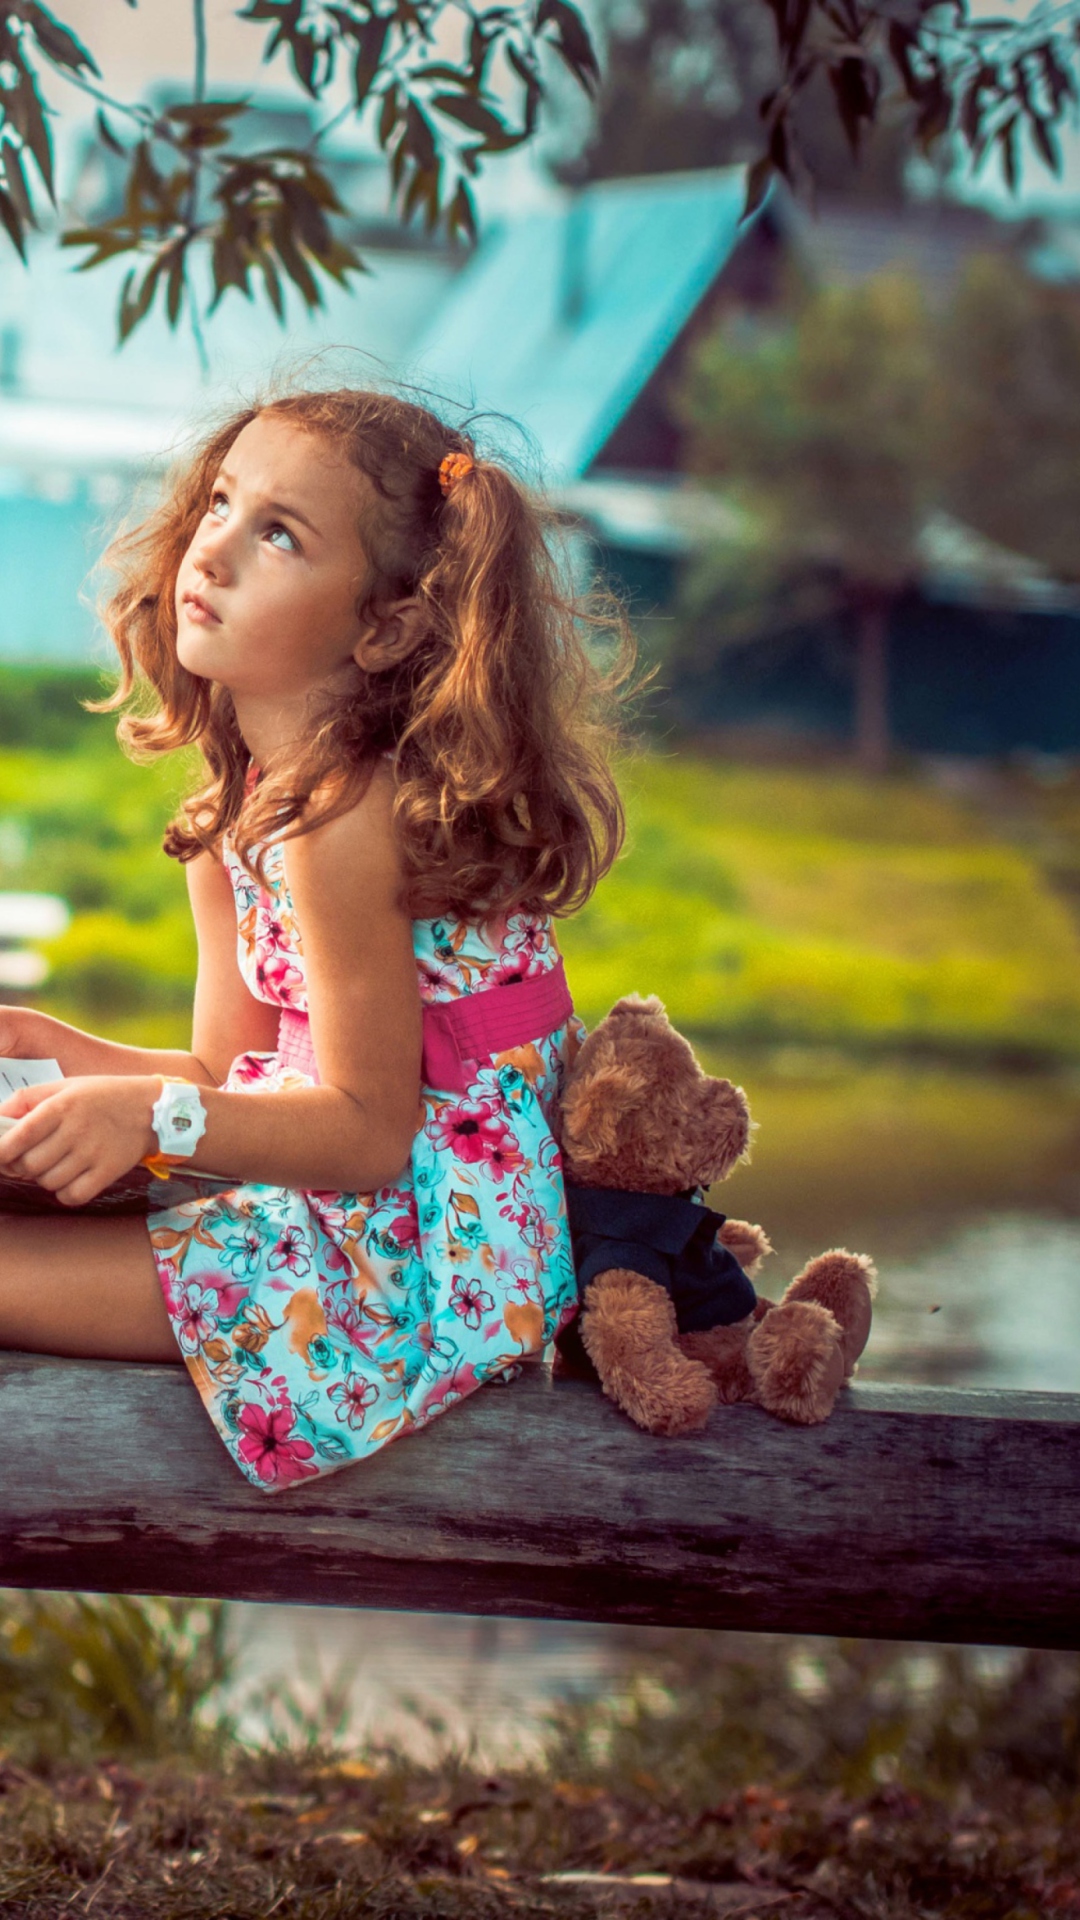 Cute Little Girl With Teddy Bear wallpaper 1080x1920